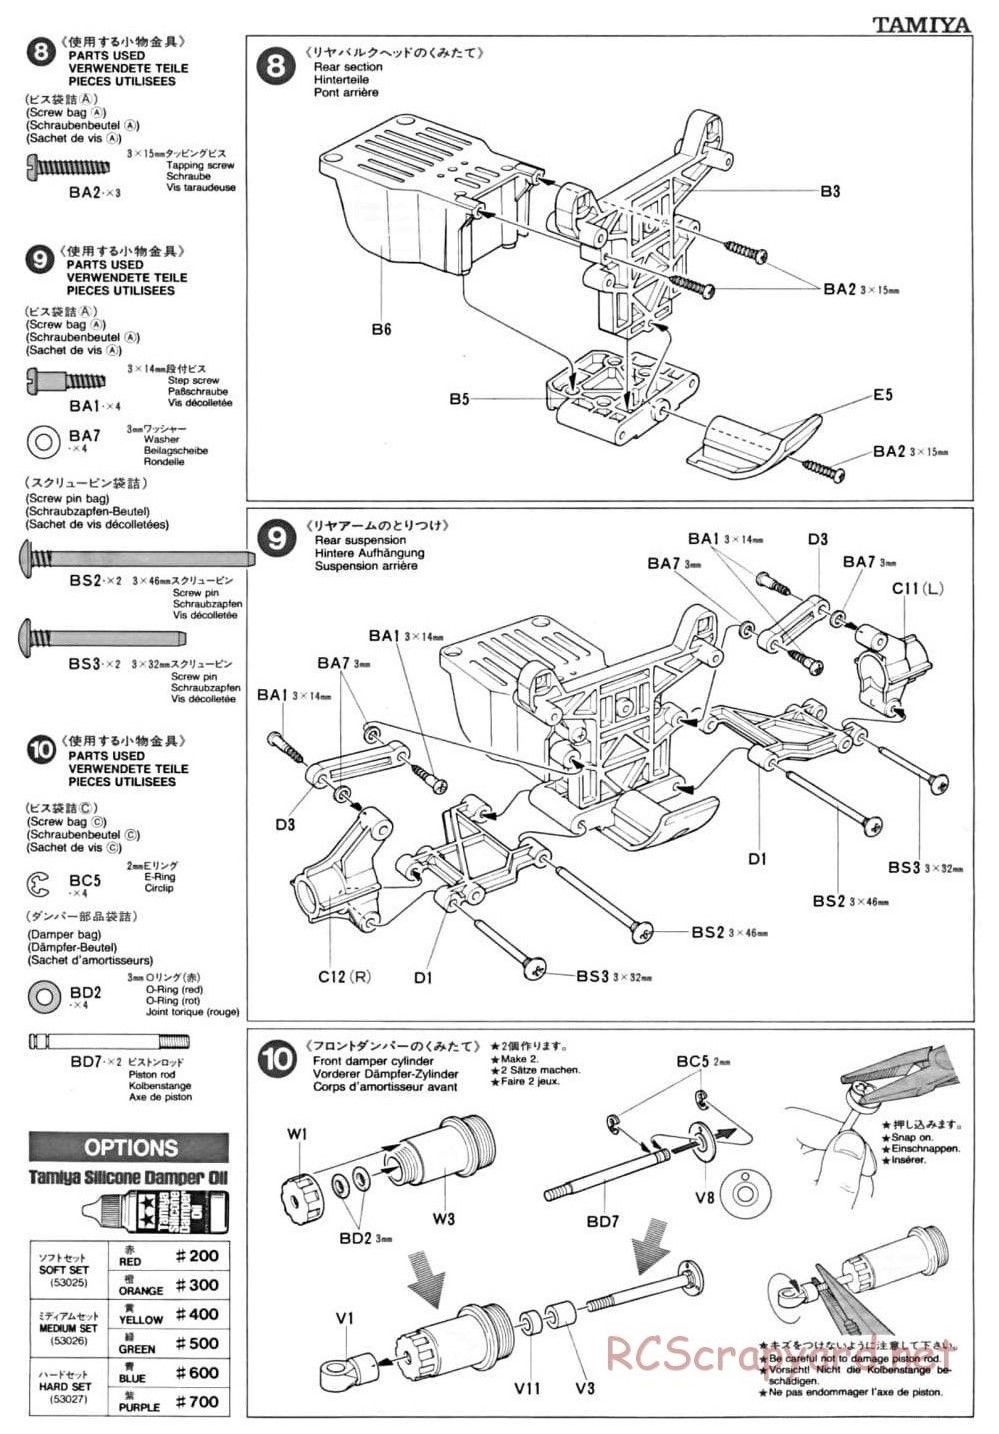 Tamiya - FF-01 Chassis - Manual - Page 7